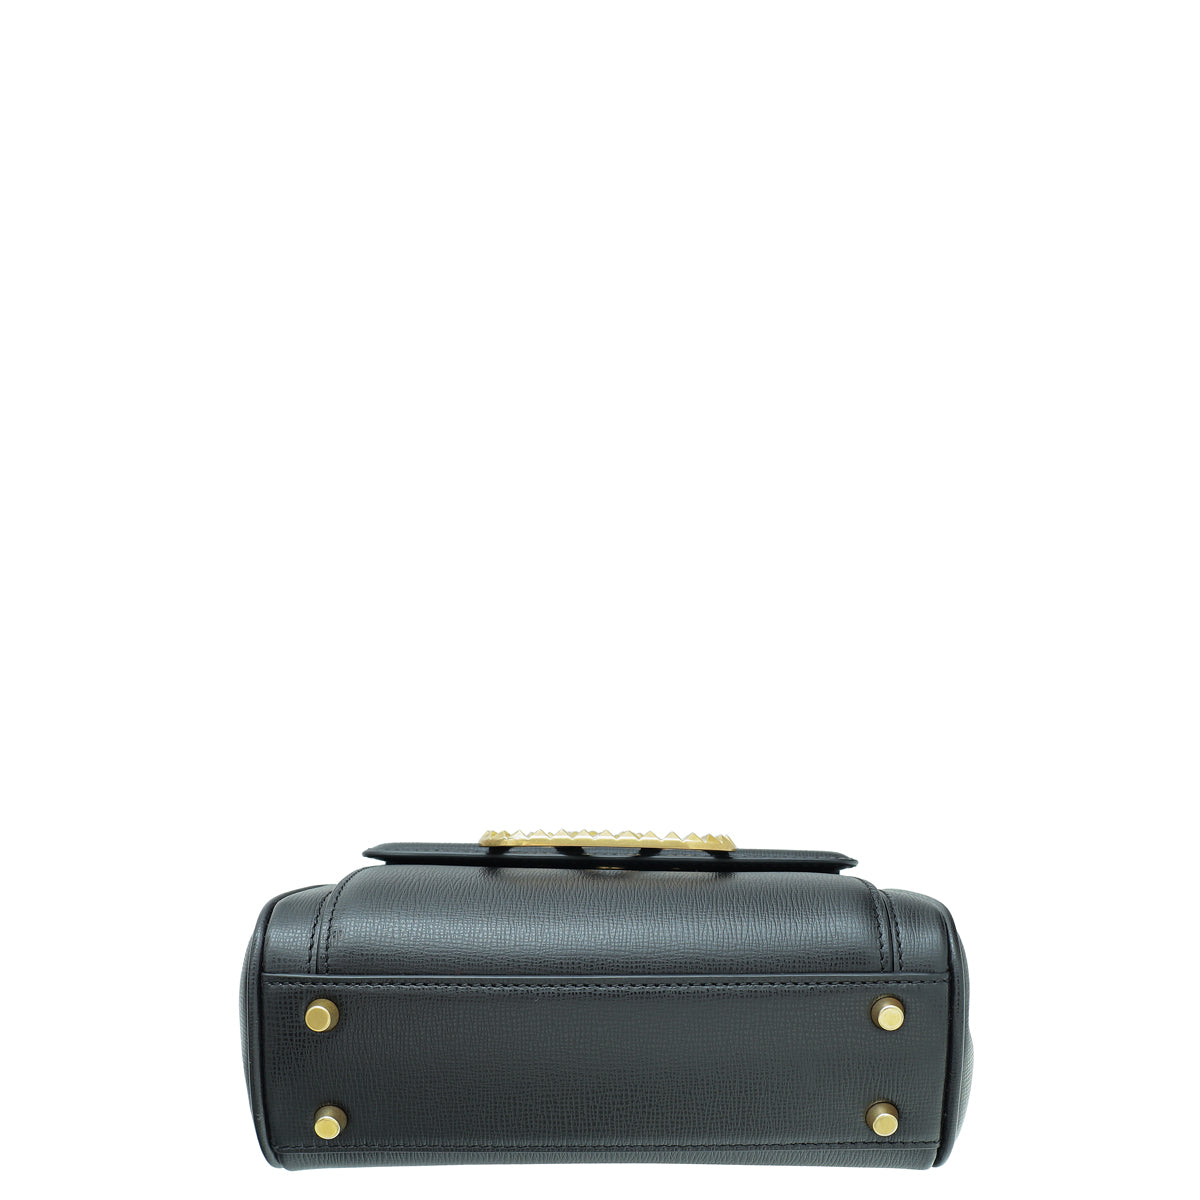 Valentino Black Mini Rockstud Alcove Top-Handle Bag